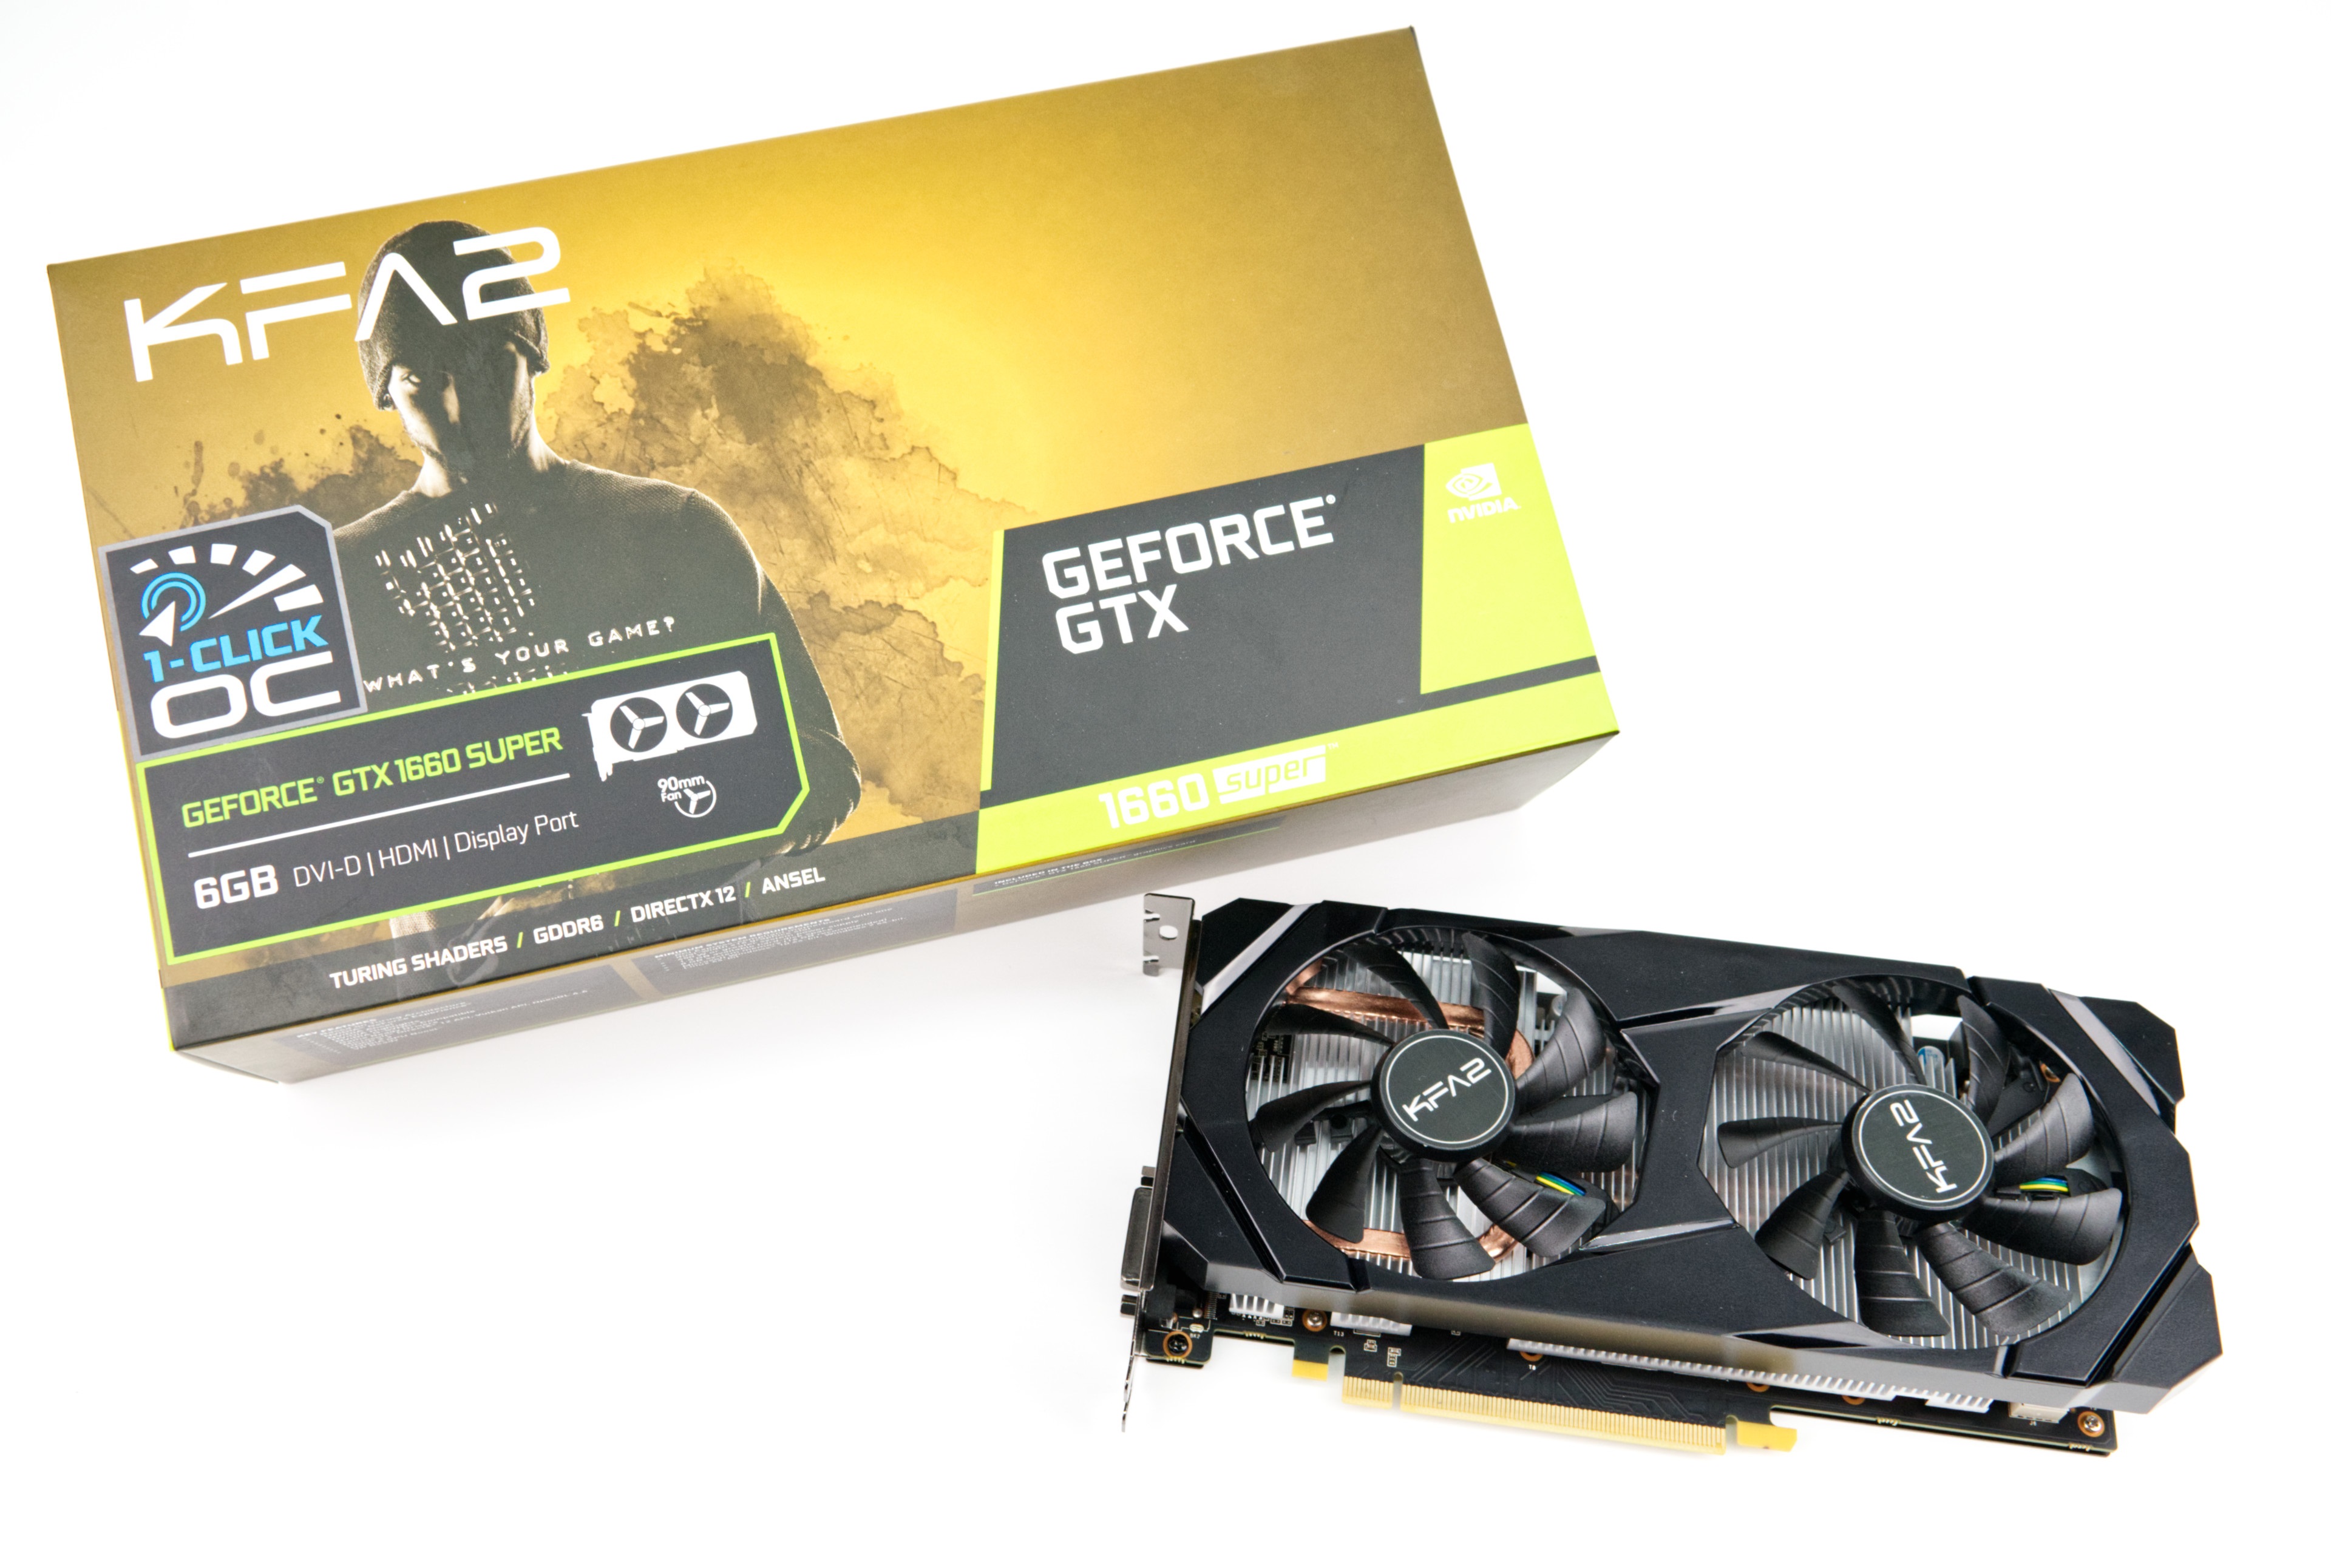 KFA2 GeForce GTX  SUPER Desktop GPU Review: The GTX  series